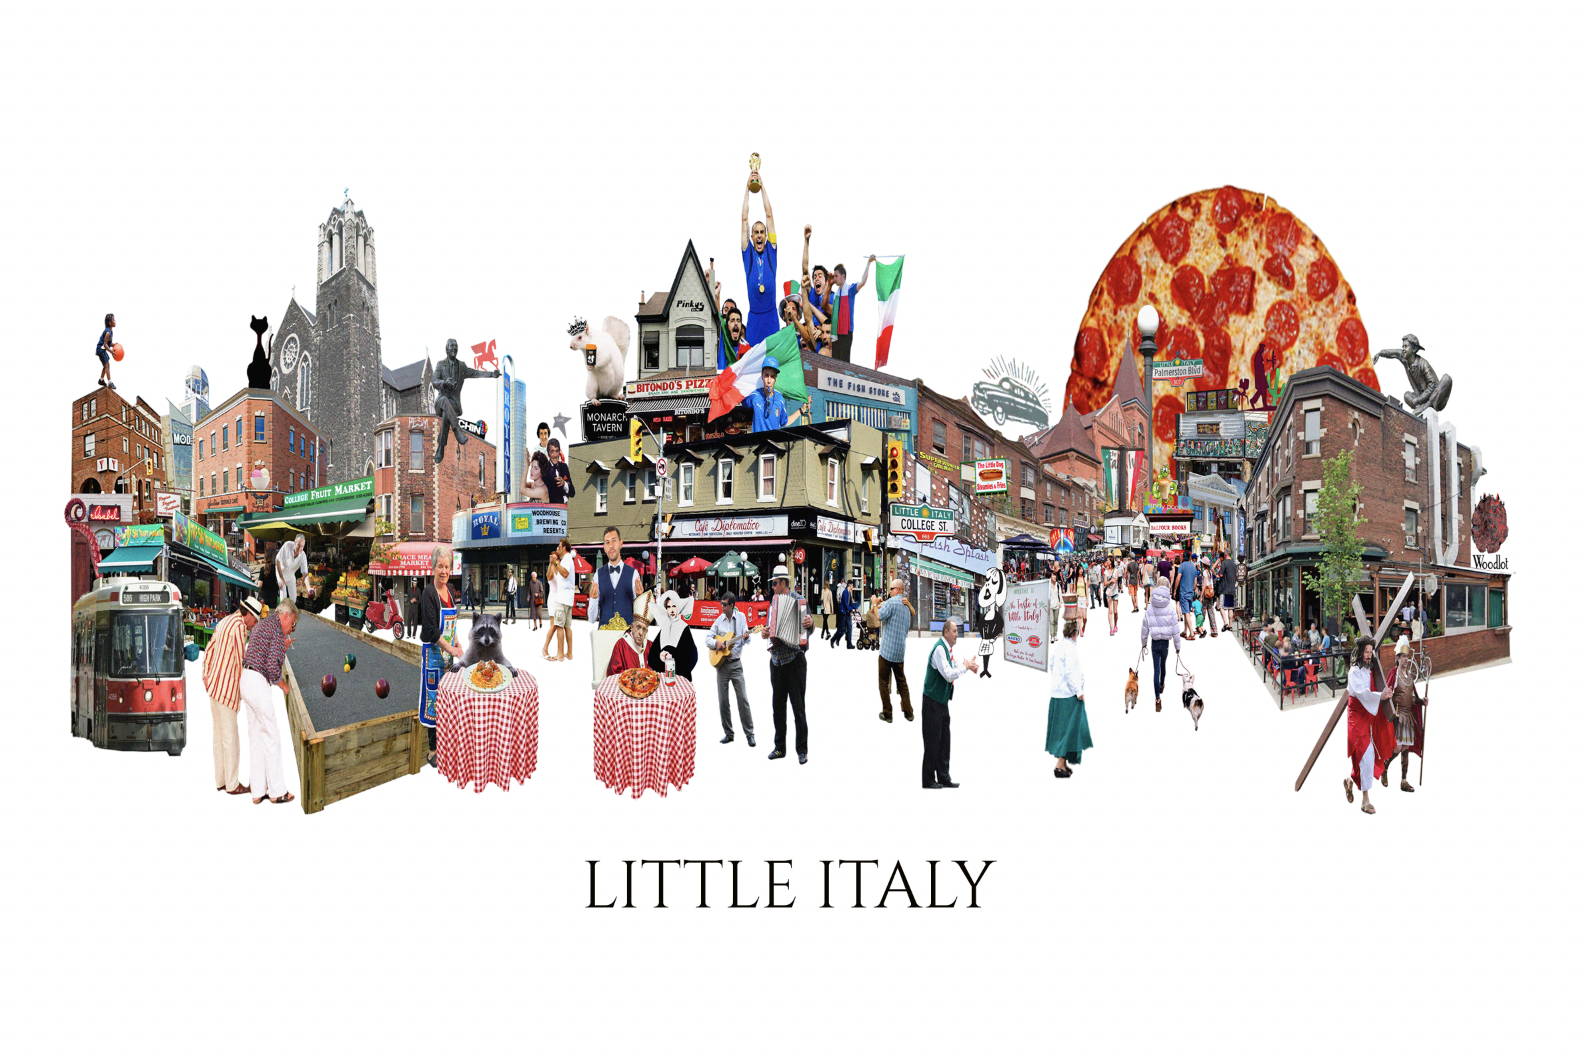 A digital collage of Toronto's Little Italy neighbourhood on College Street